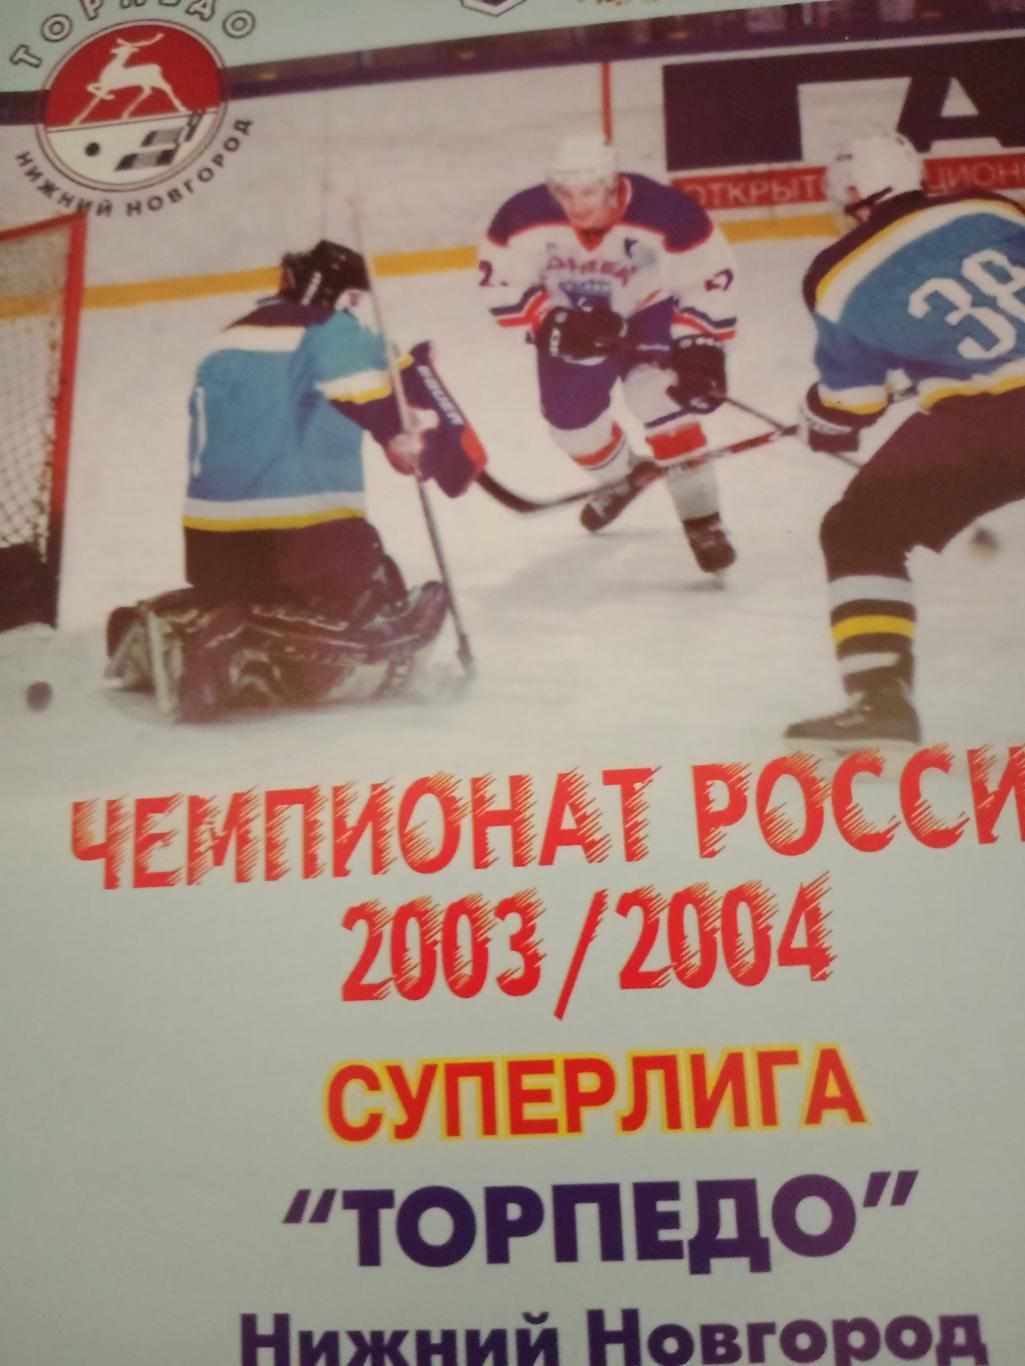 Торпедо Нижний Новгород, 2004 г. Матчи - Химик Воскресенск, Авангард.